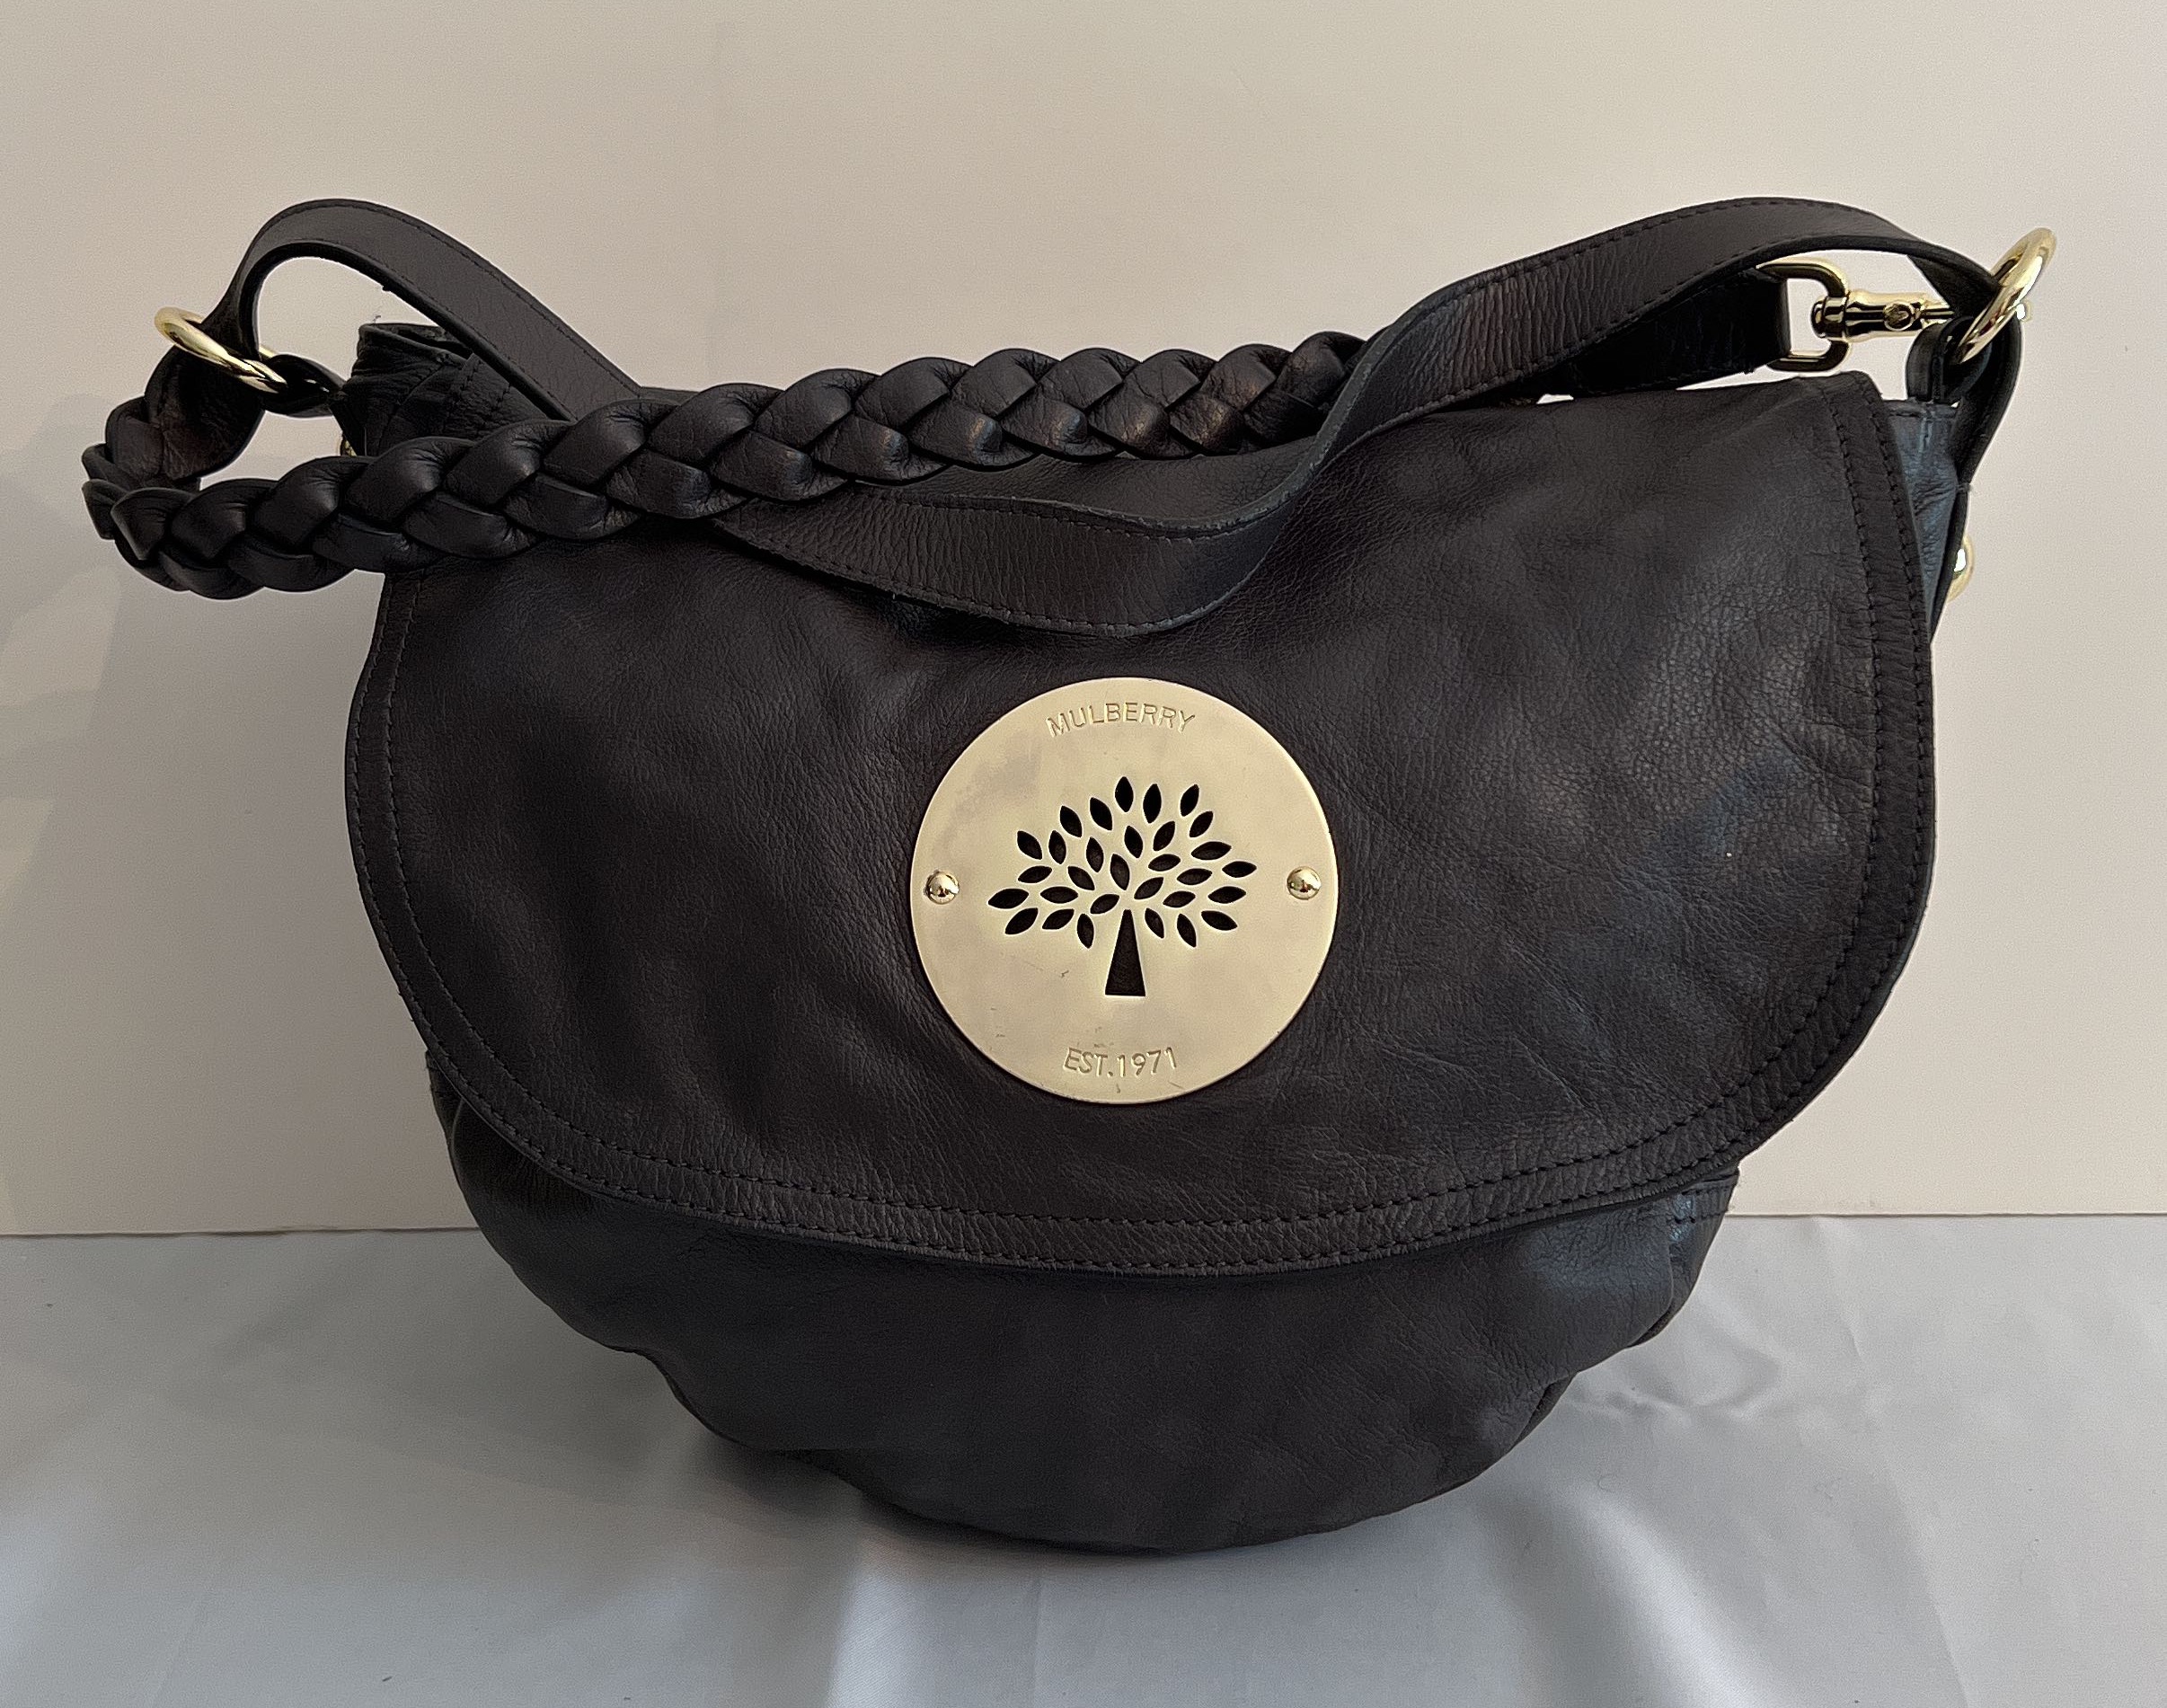 Mulberry Black Leather Handbag 4898232.htm - Buy Mulberry Black Leather  Handbag 4898232.htm online in India